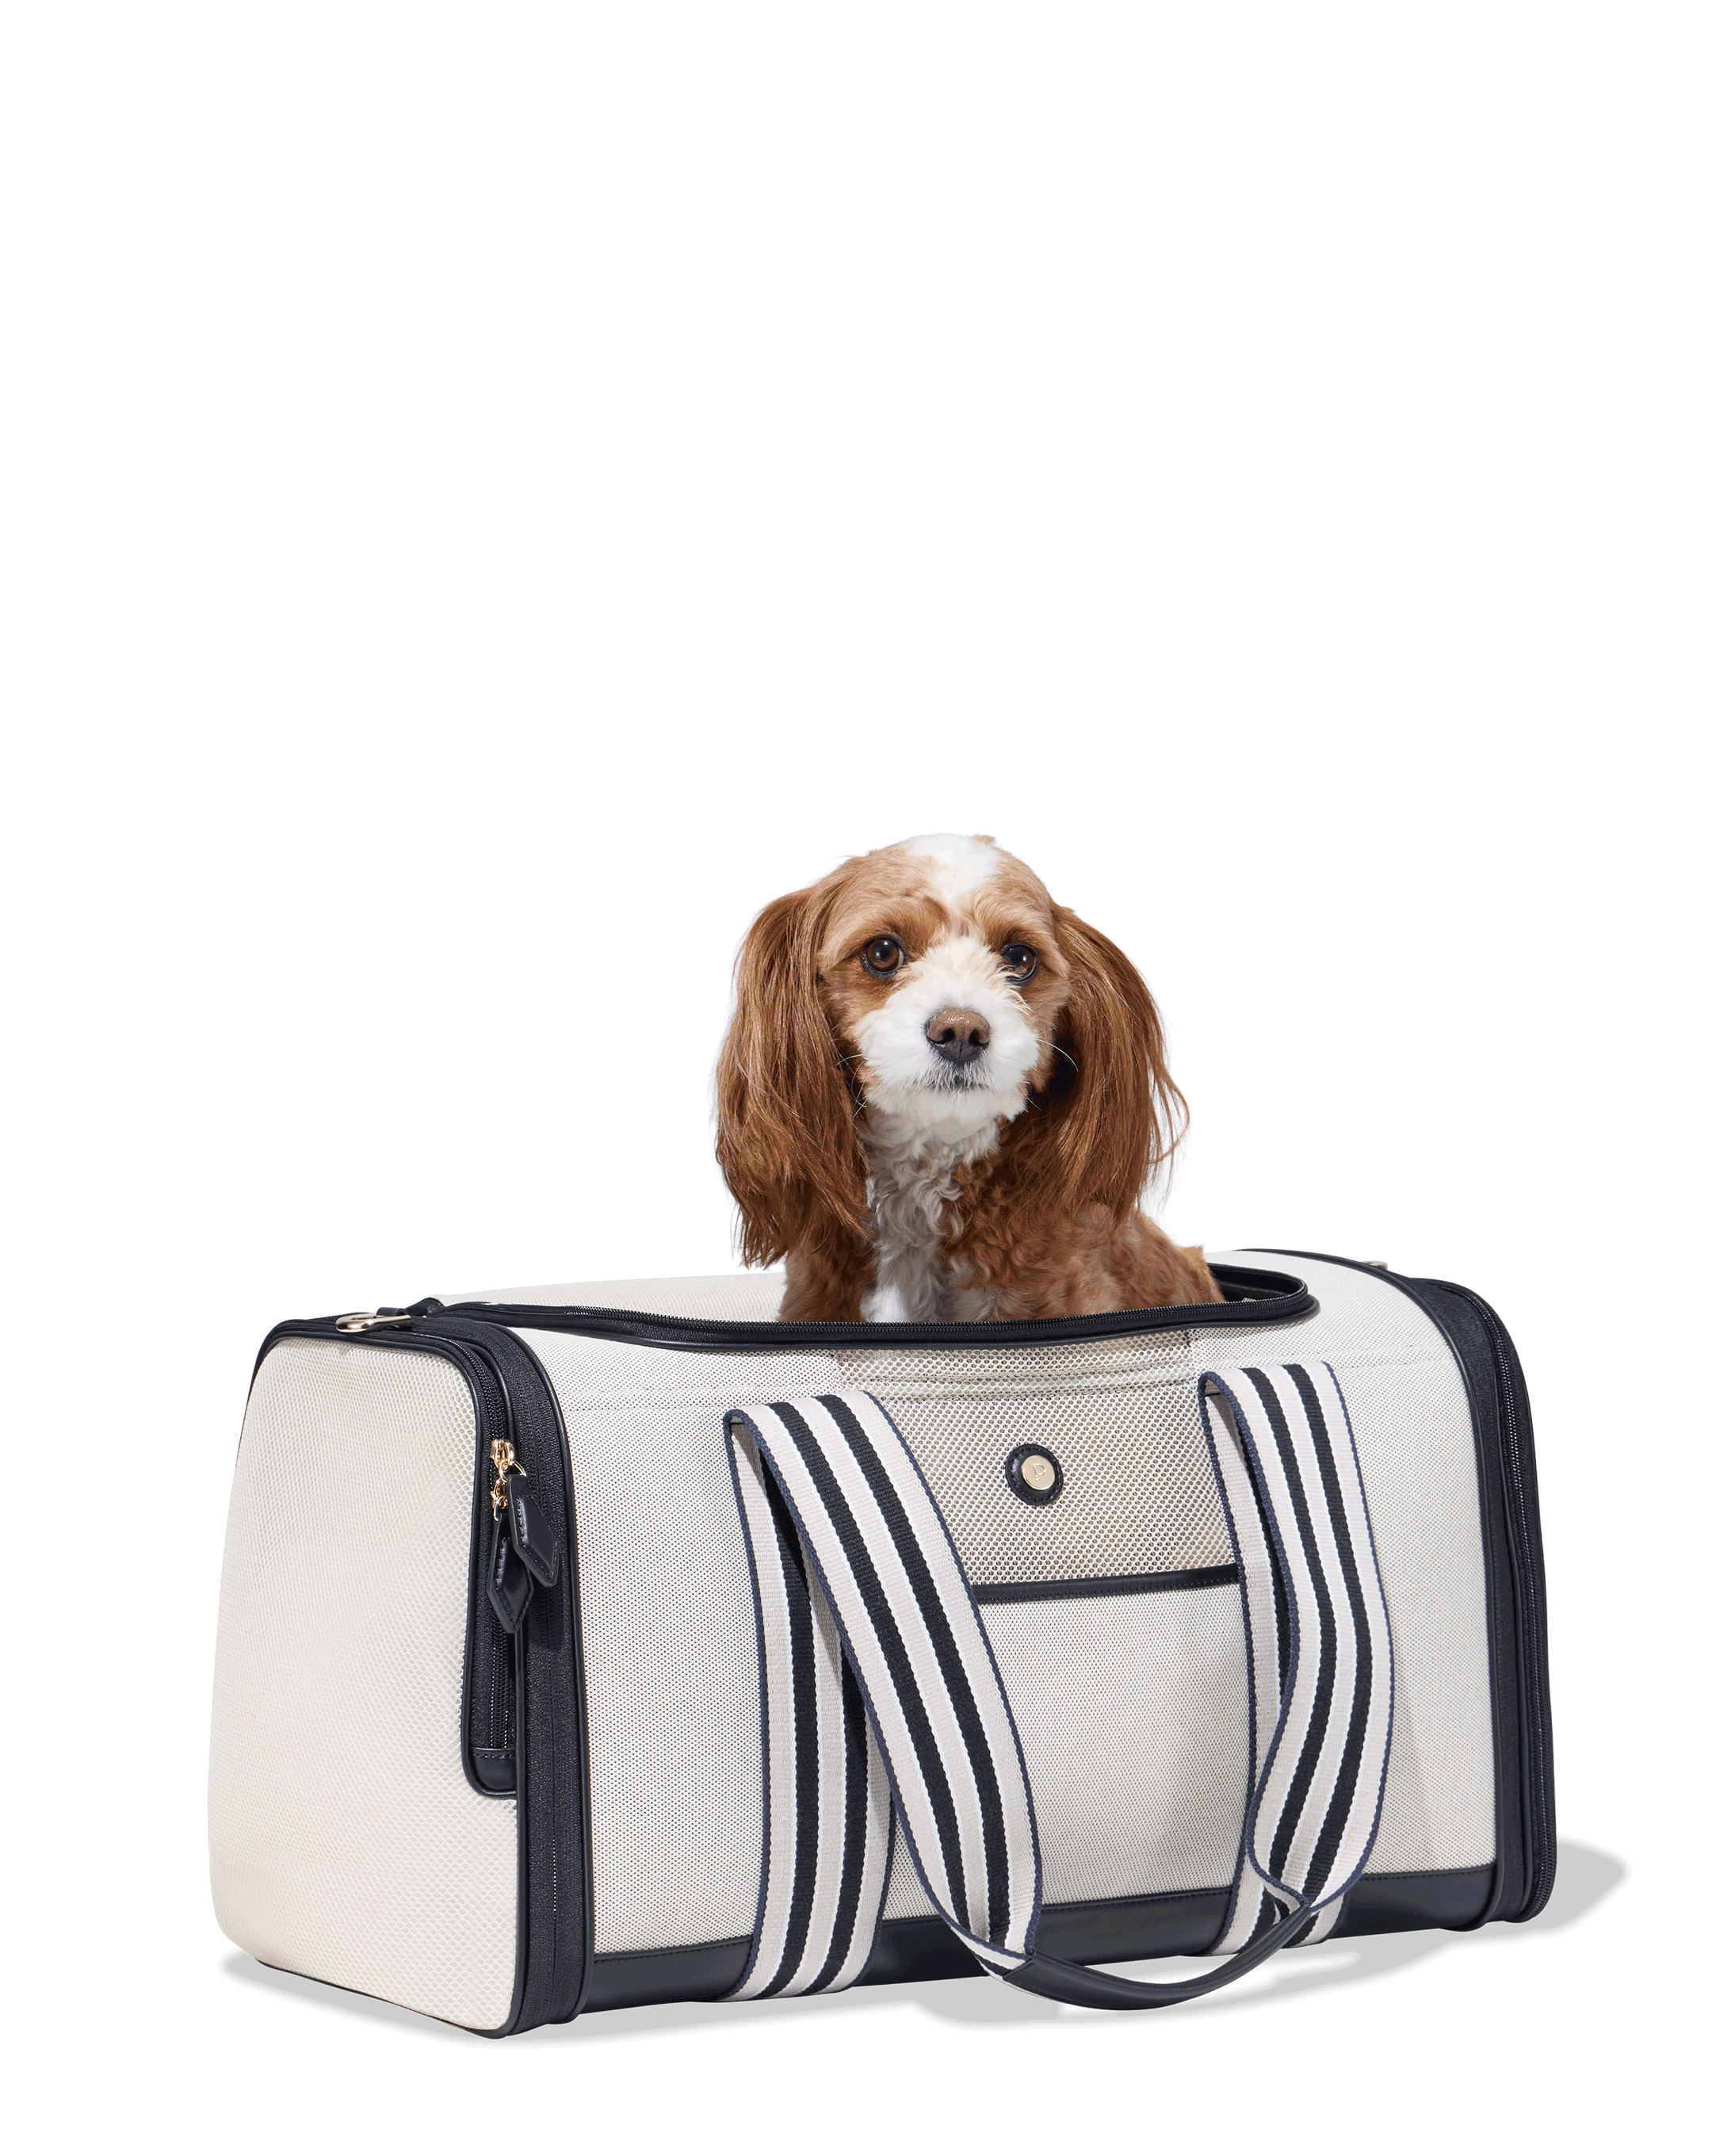 Catlerio Dog Carrier Backpack Bag Cat Puppy Pet Backpack India | Ubuy